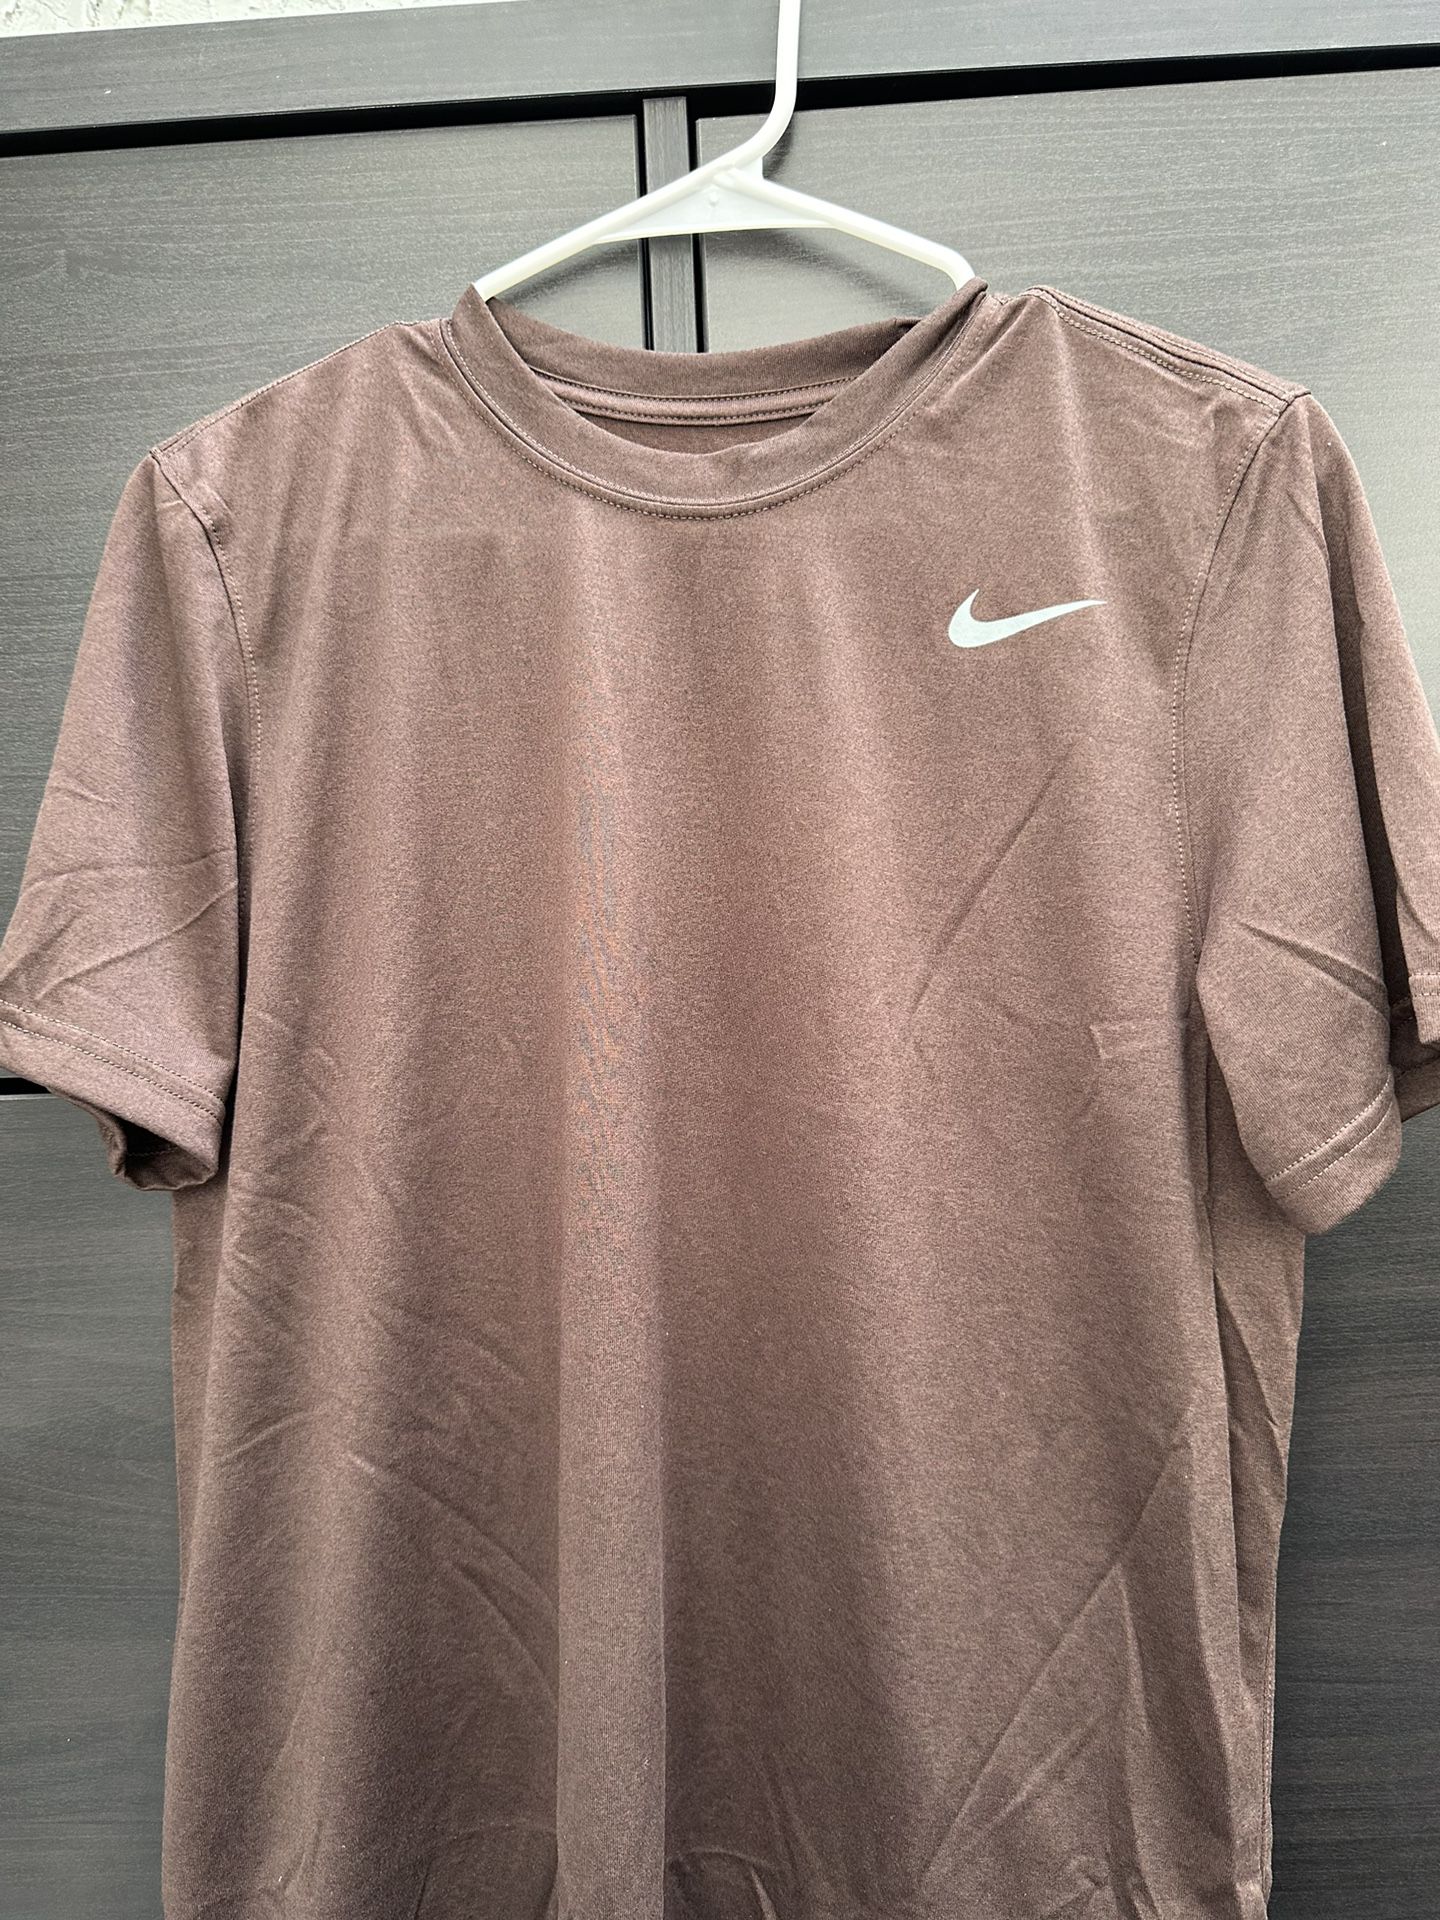 Nike Dri Fit Shirt - Medium